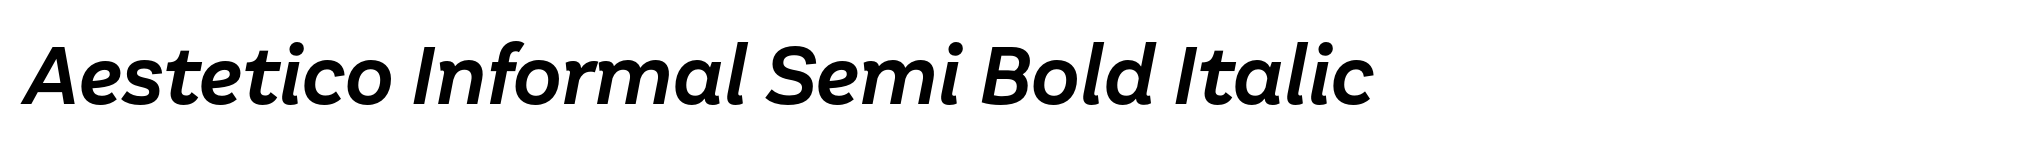 Aestetico Informal Semi Bold Italic image